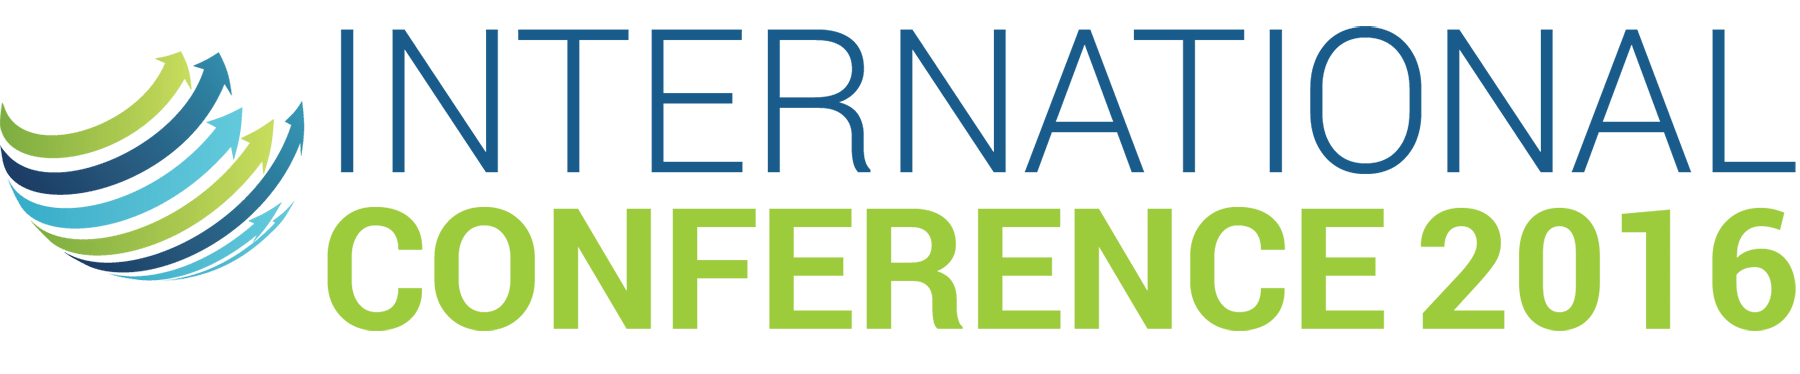 Point of rental software internatioinal conference 2016 registration